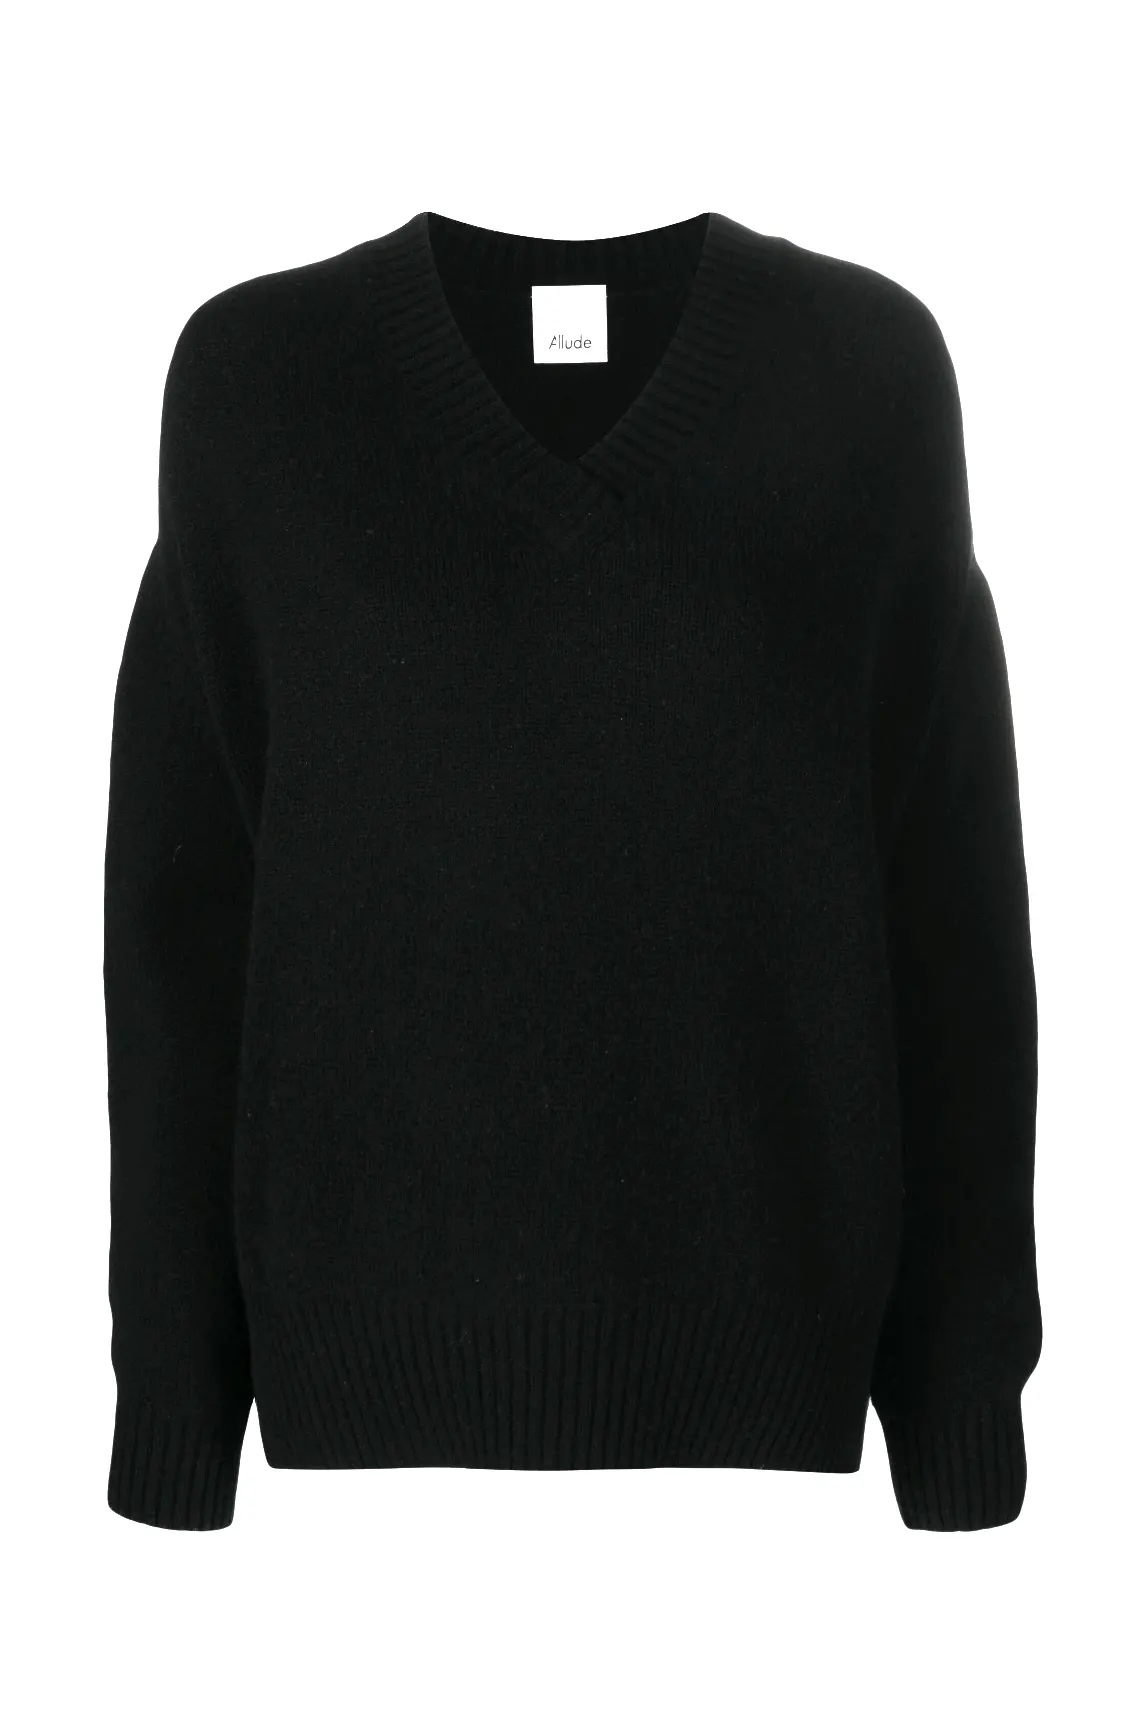 V-neck knitted jumper, black